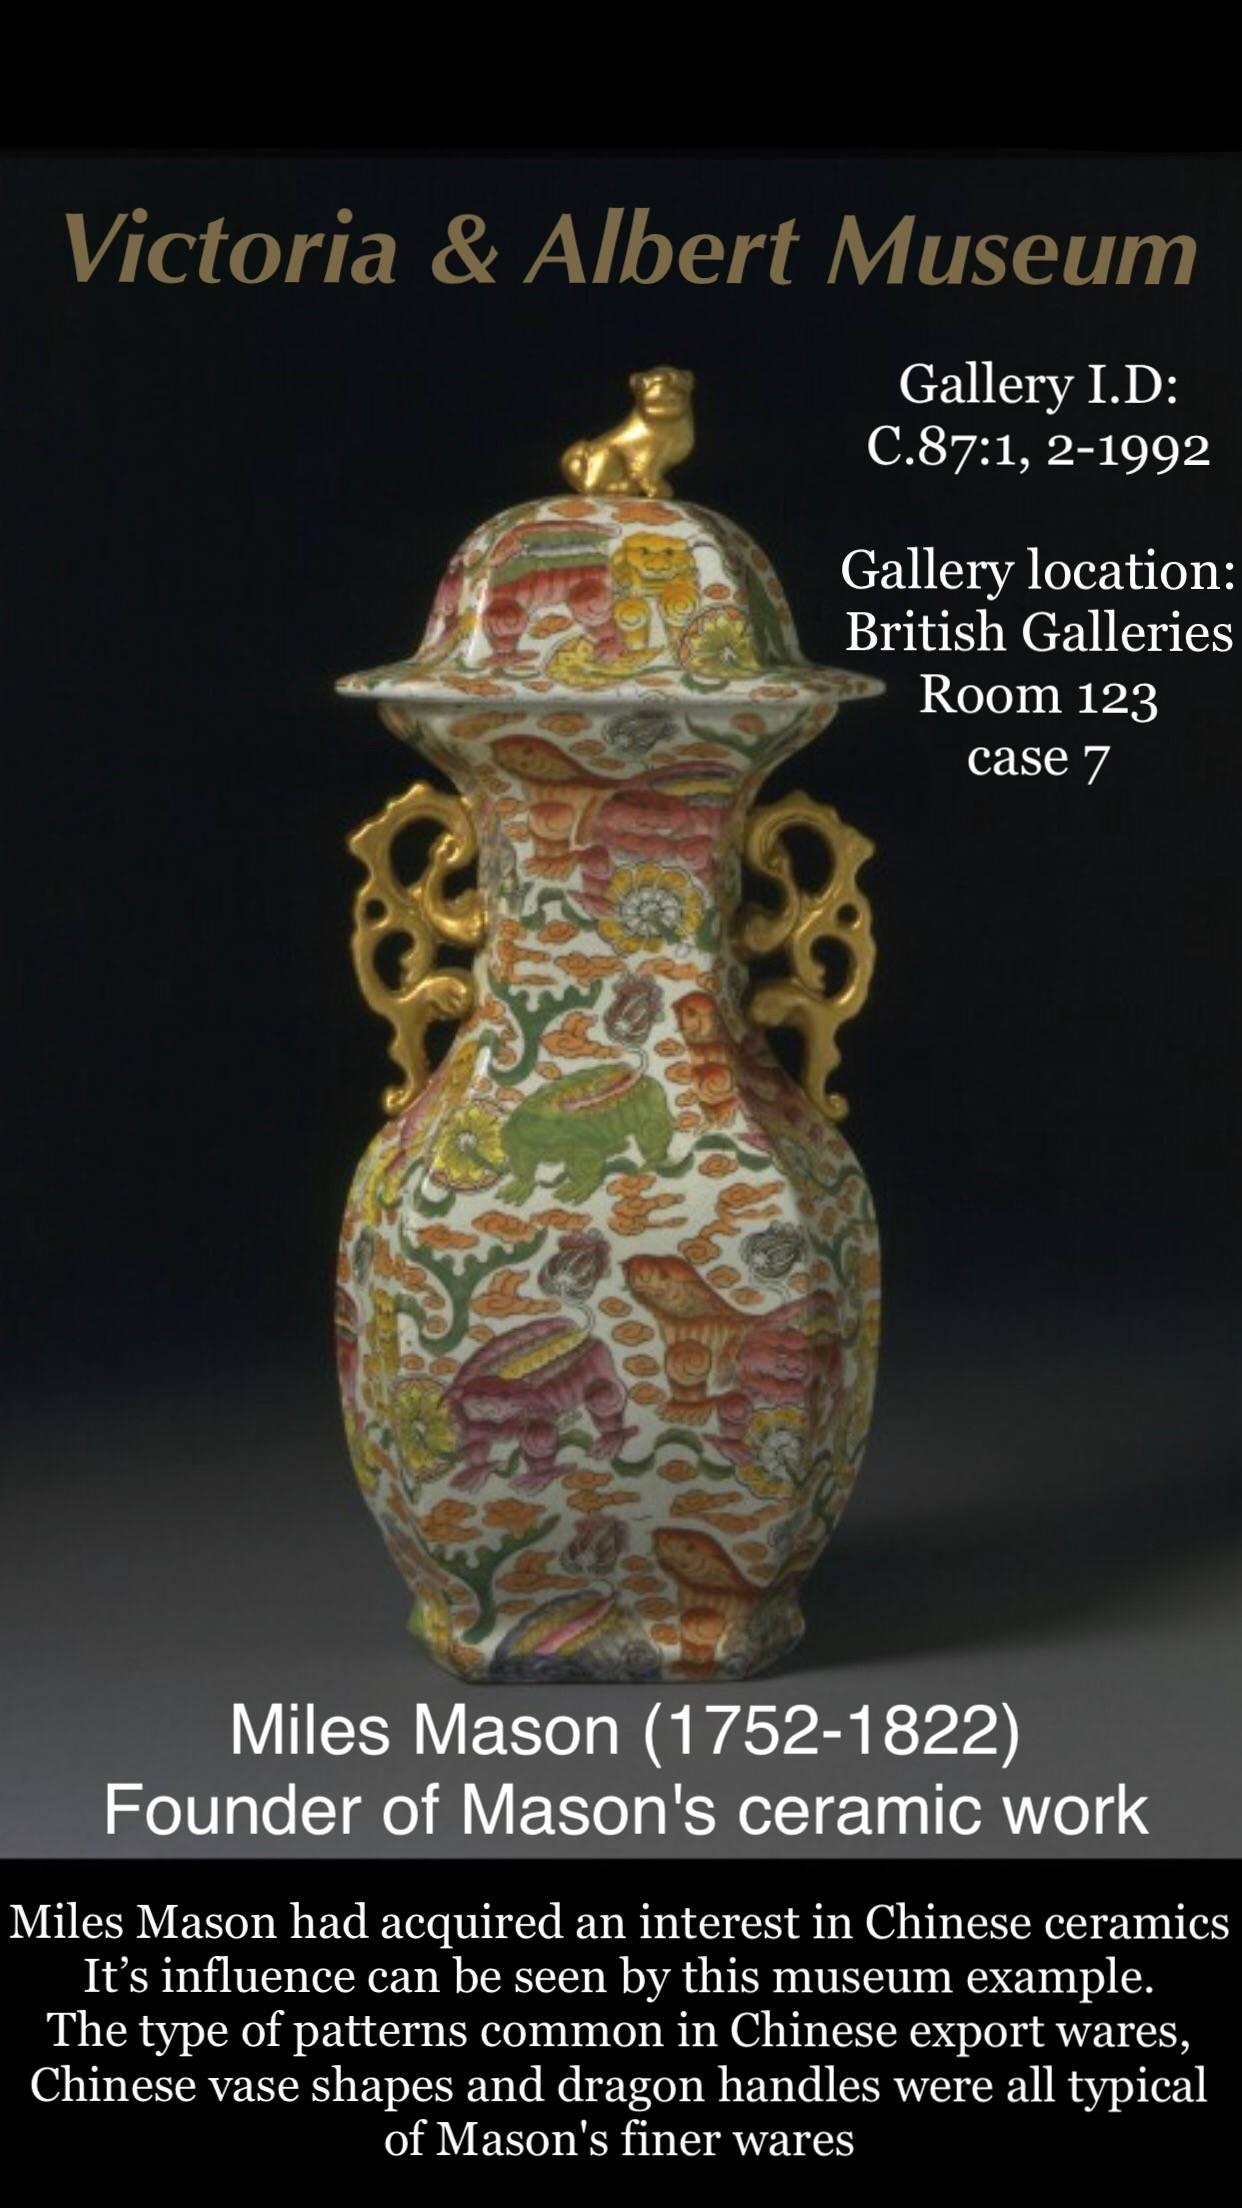 Pottery Fine Oriental Styled Lidded Vase by Masons For Sale